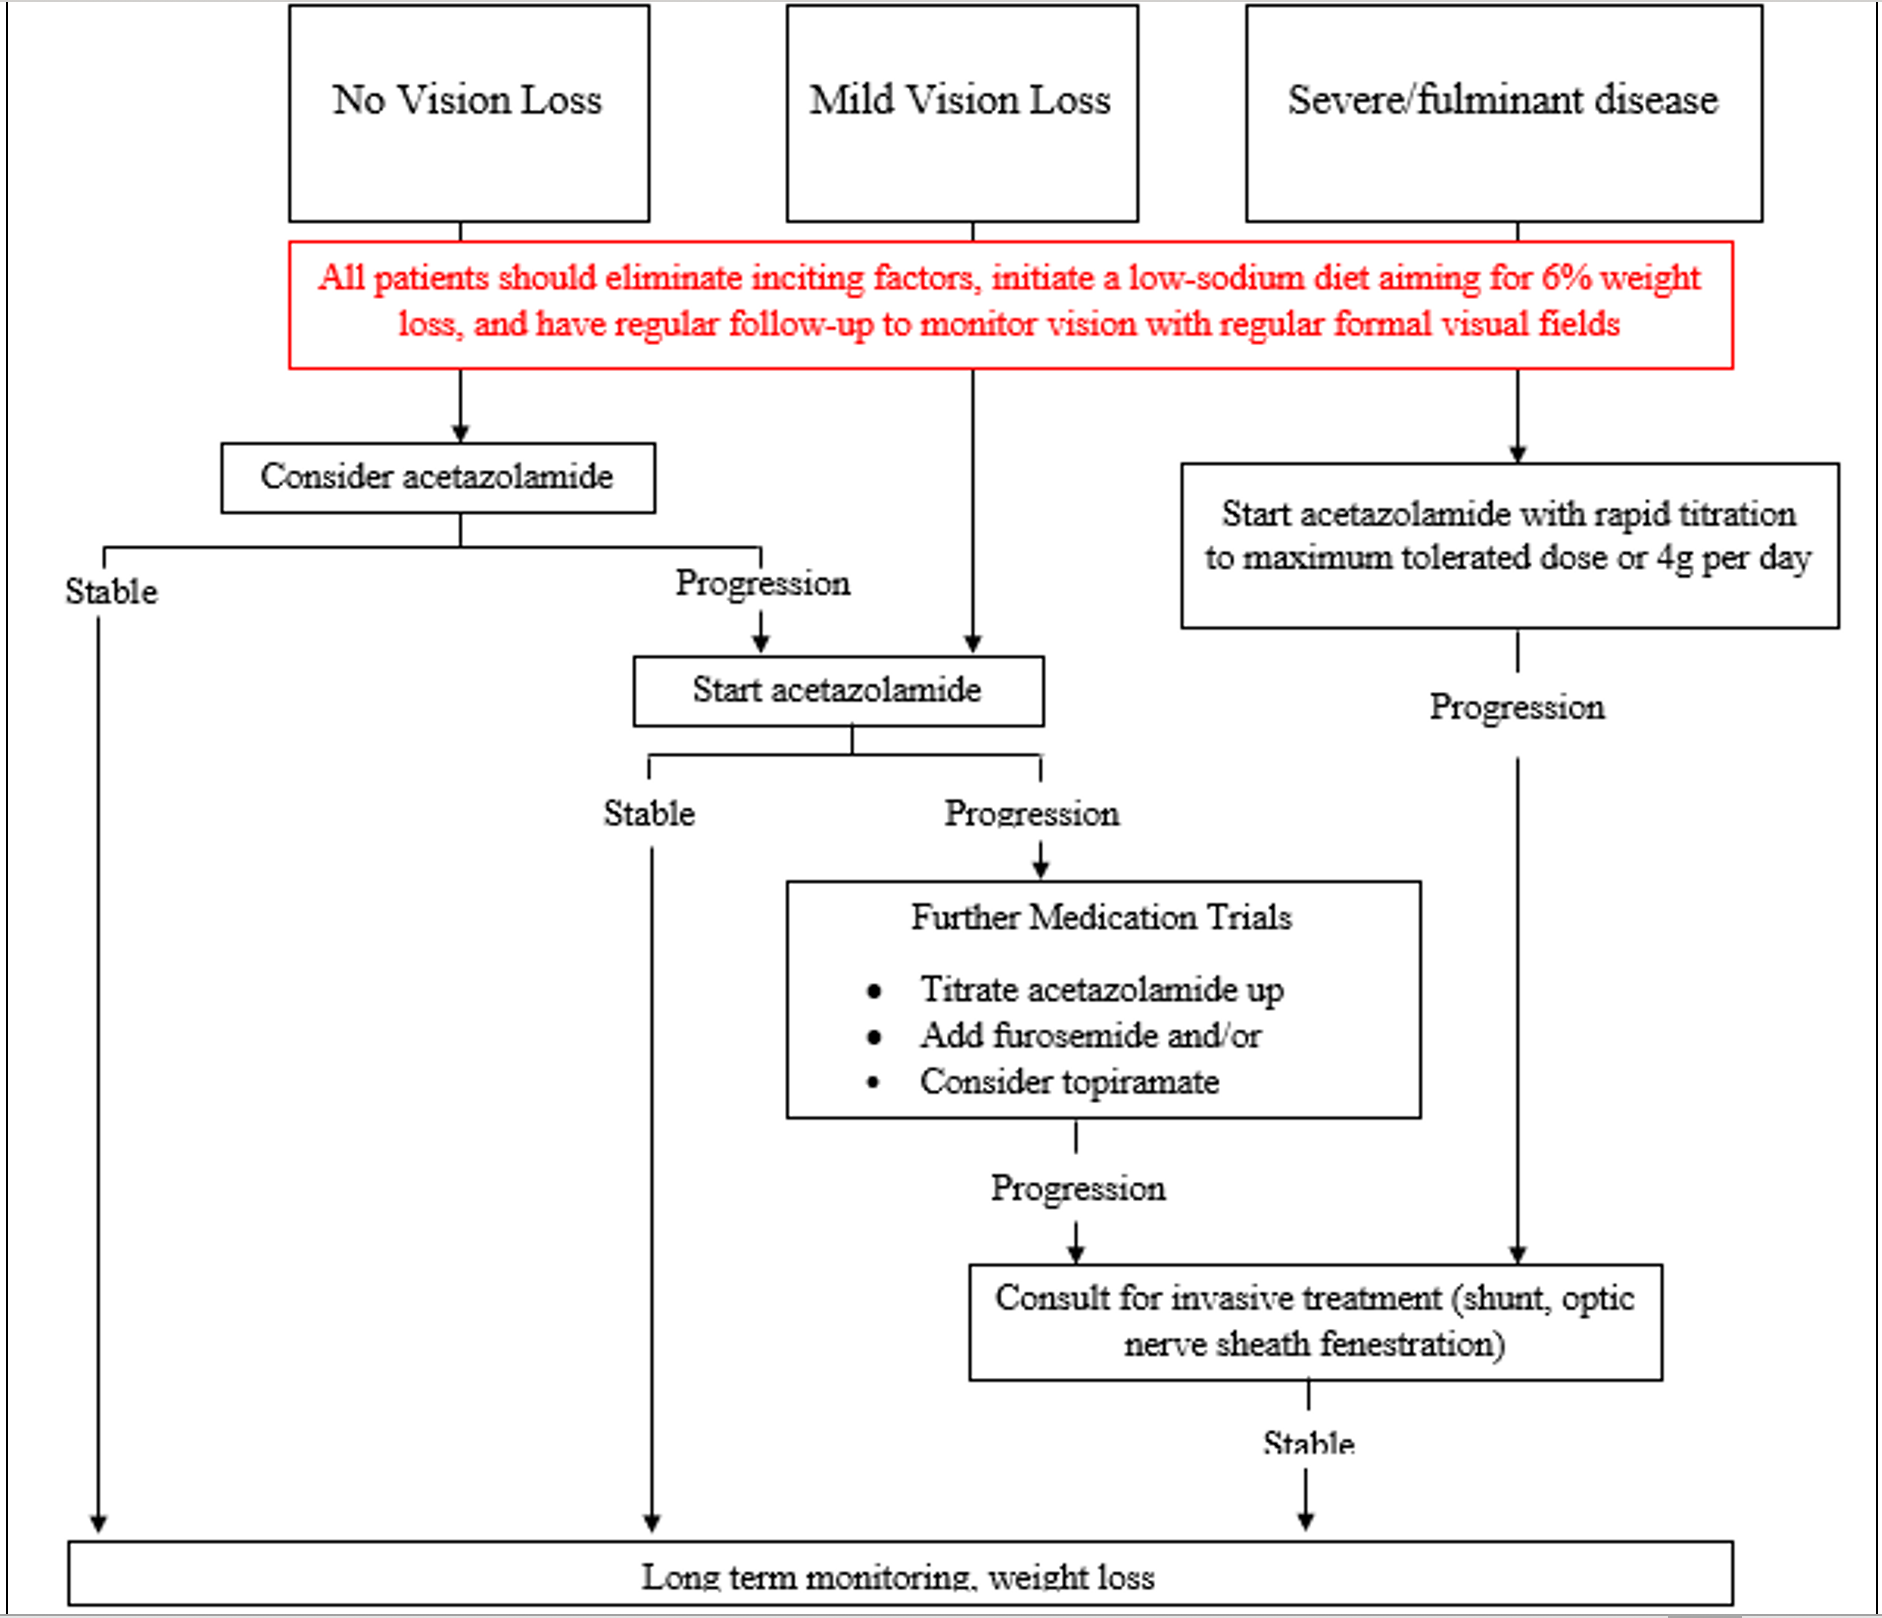 Figure 1. IIH Treatment Overview